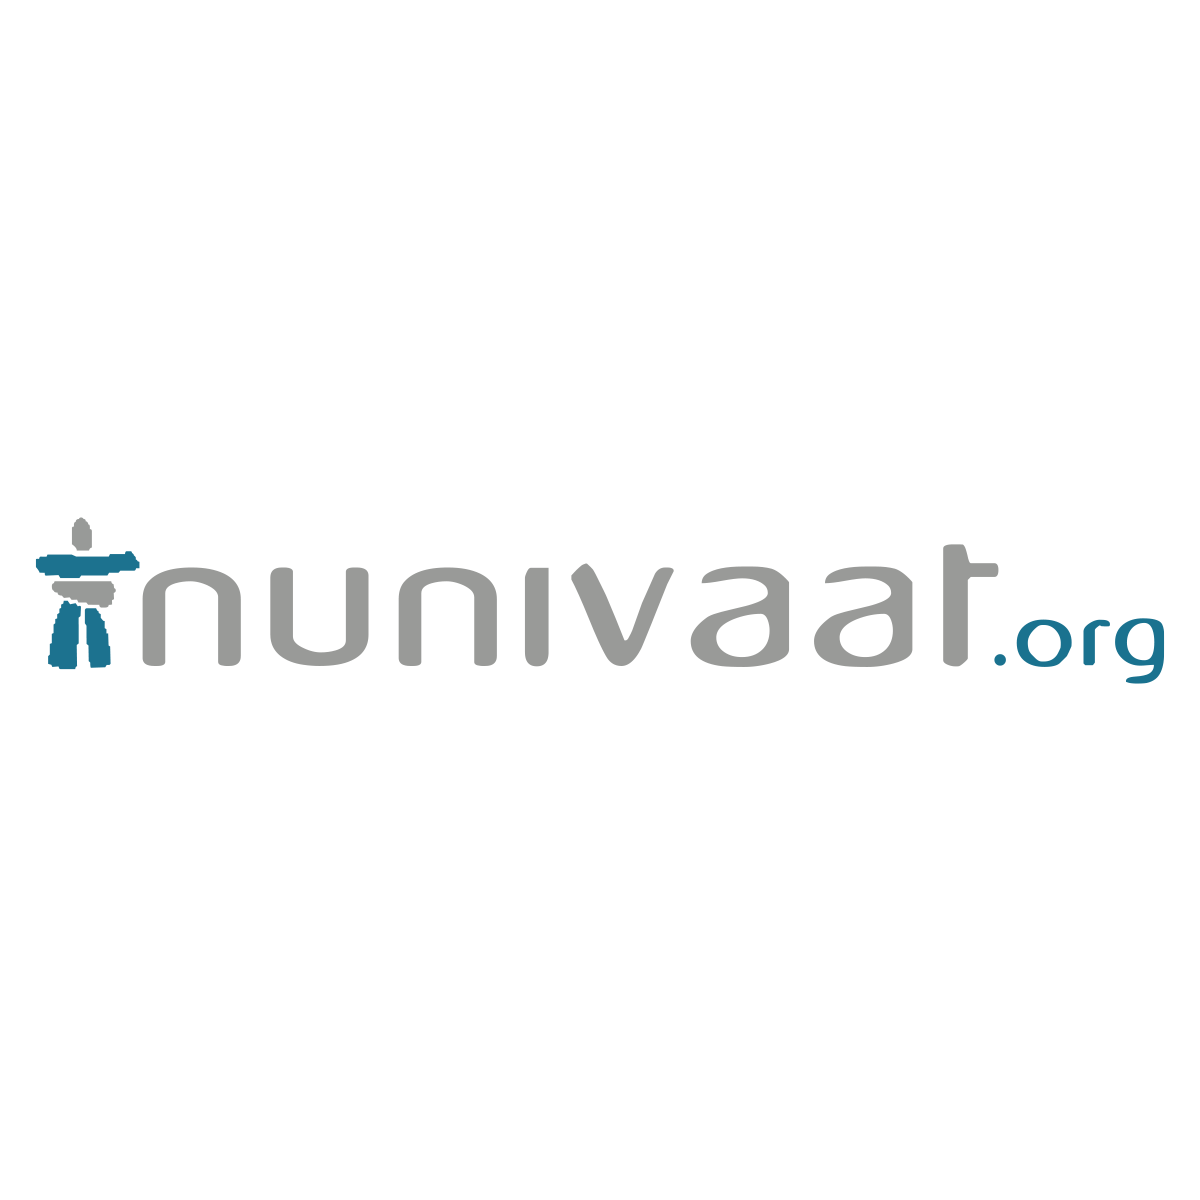 (c) Nunivaat.org